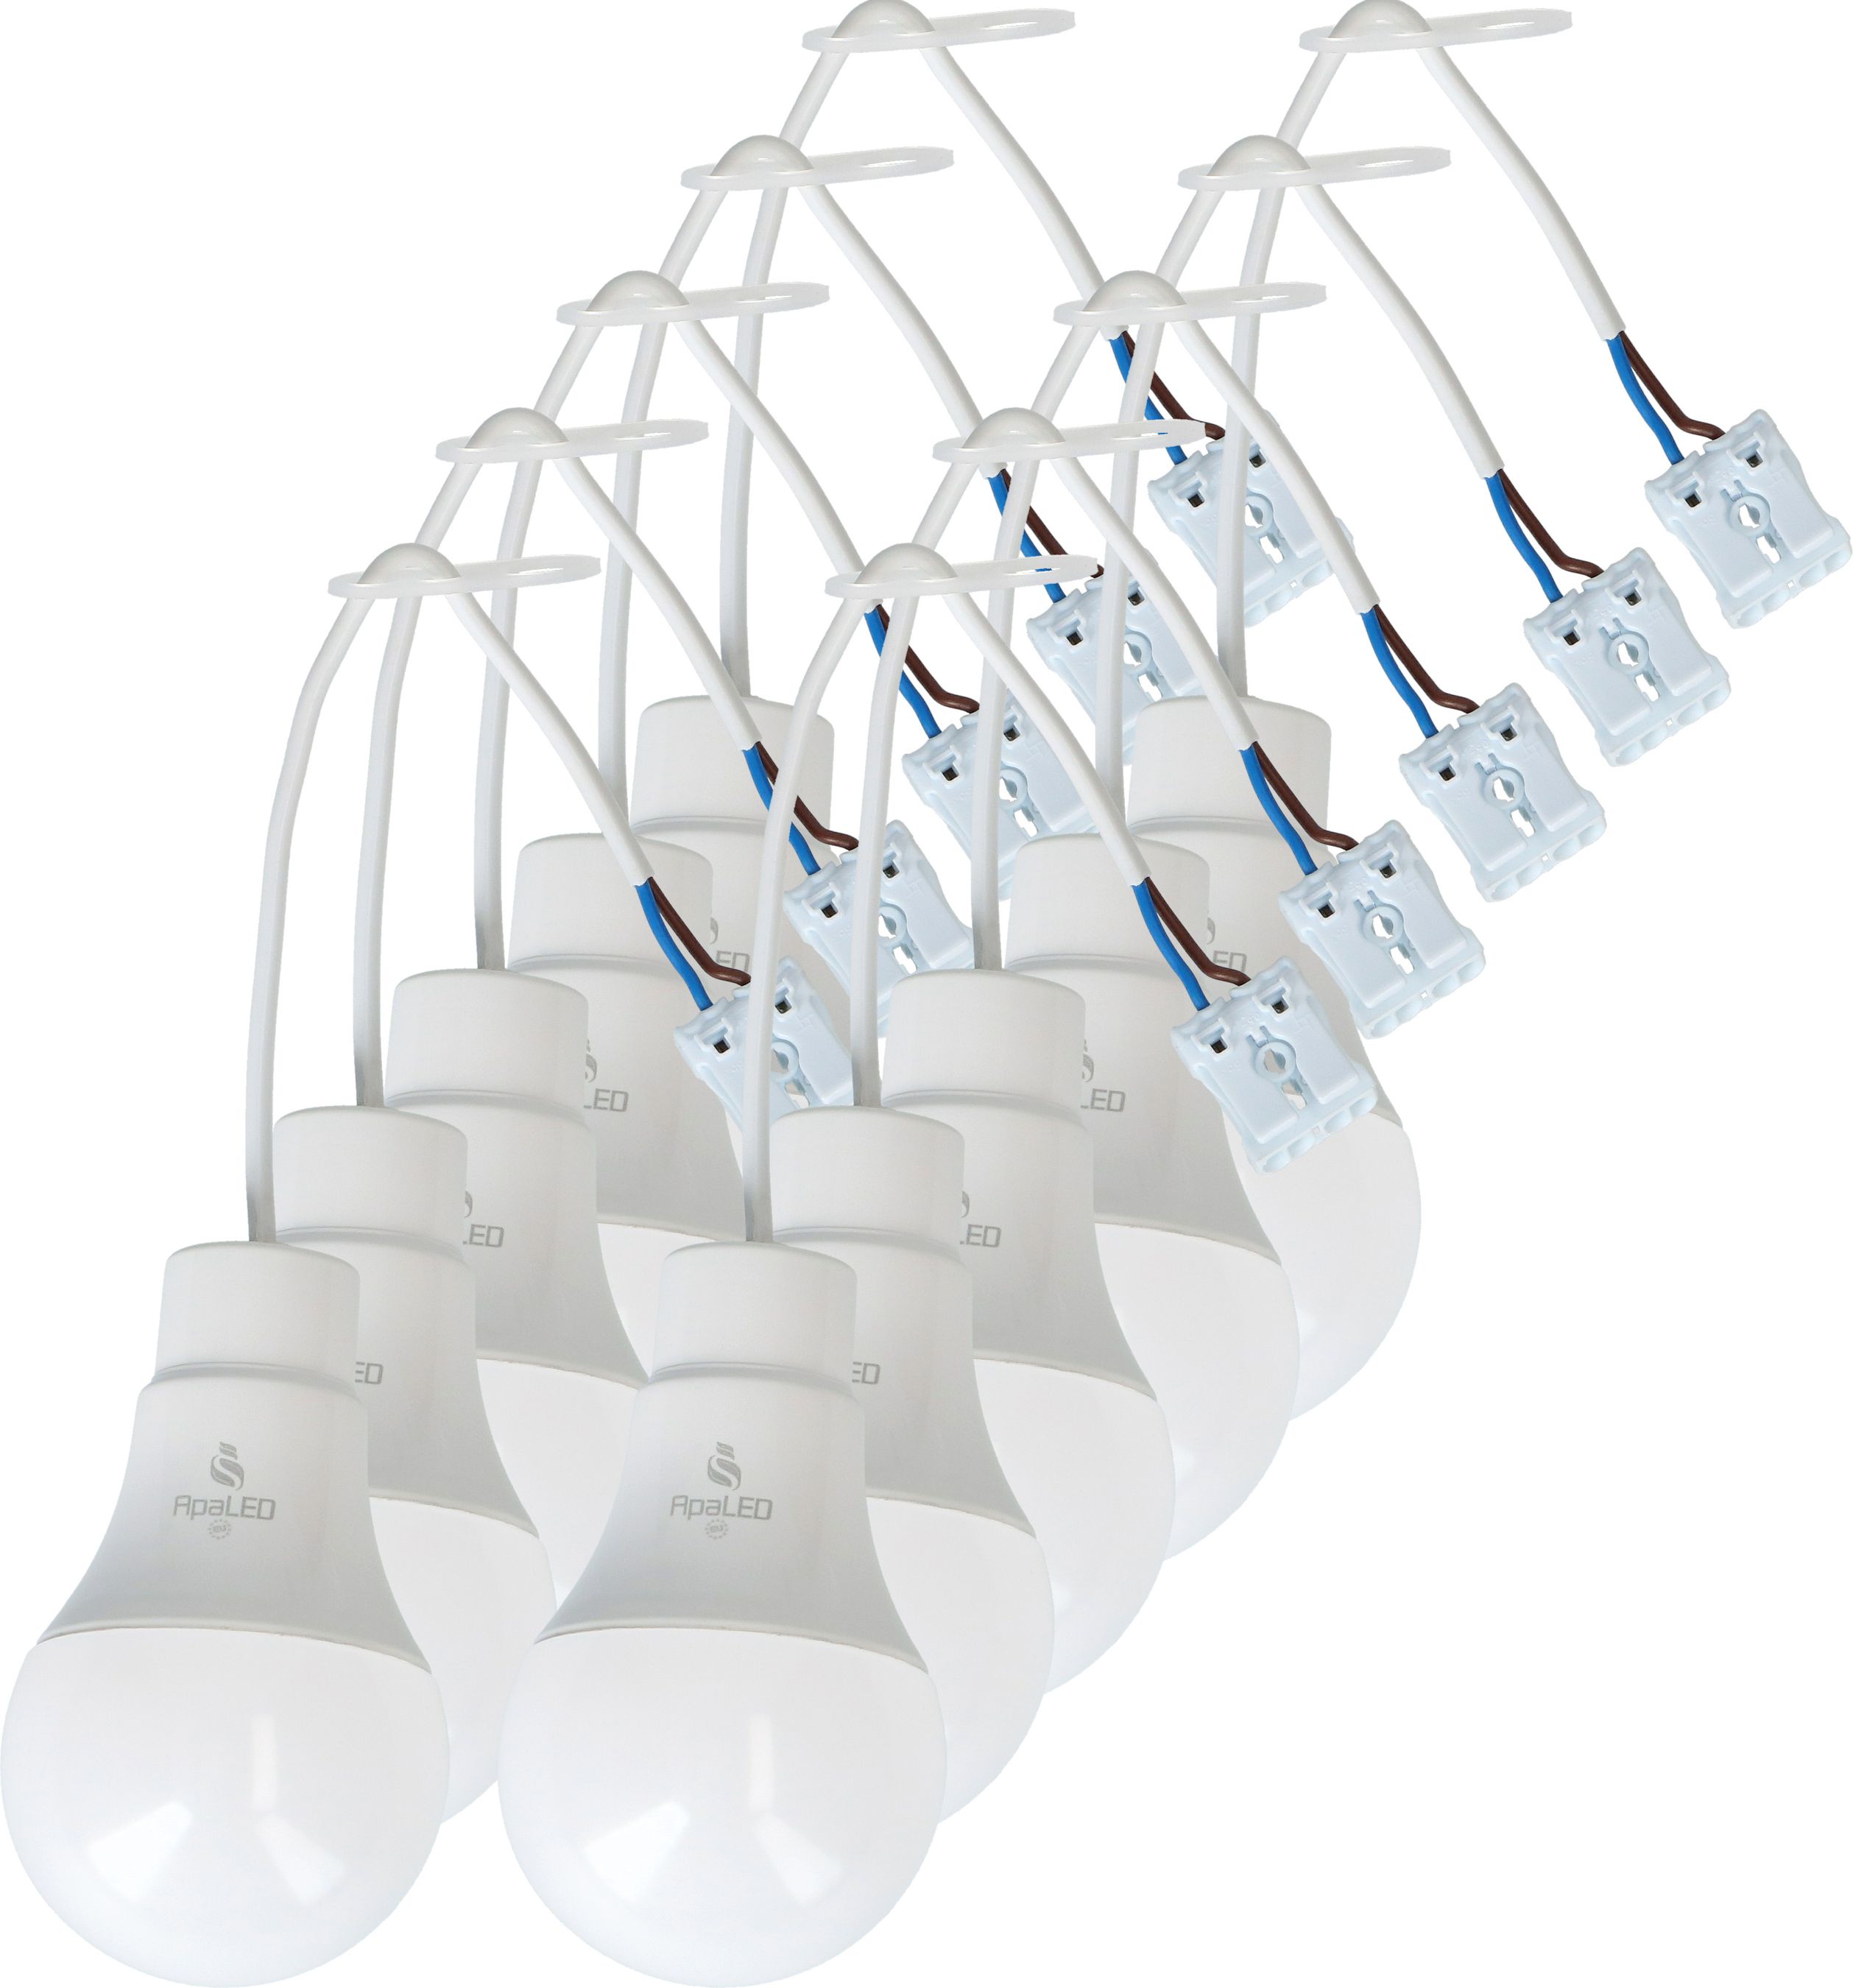 LED-Baustellenlampe Aktionsset inkl. 2x Batterien und Lampenschlüssel -  Baustellenshop24 – Baustellenbedarf günstig kaufen